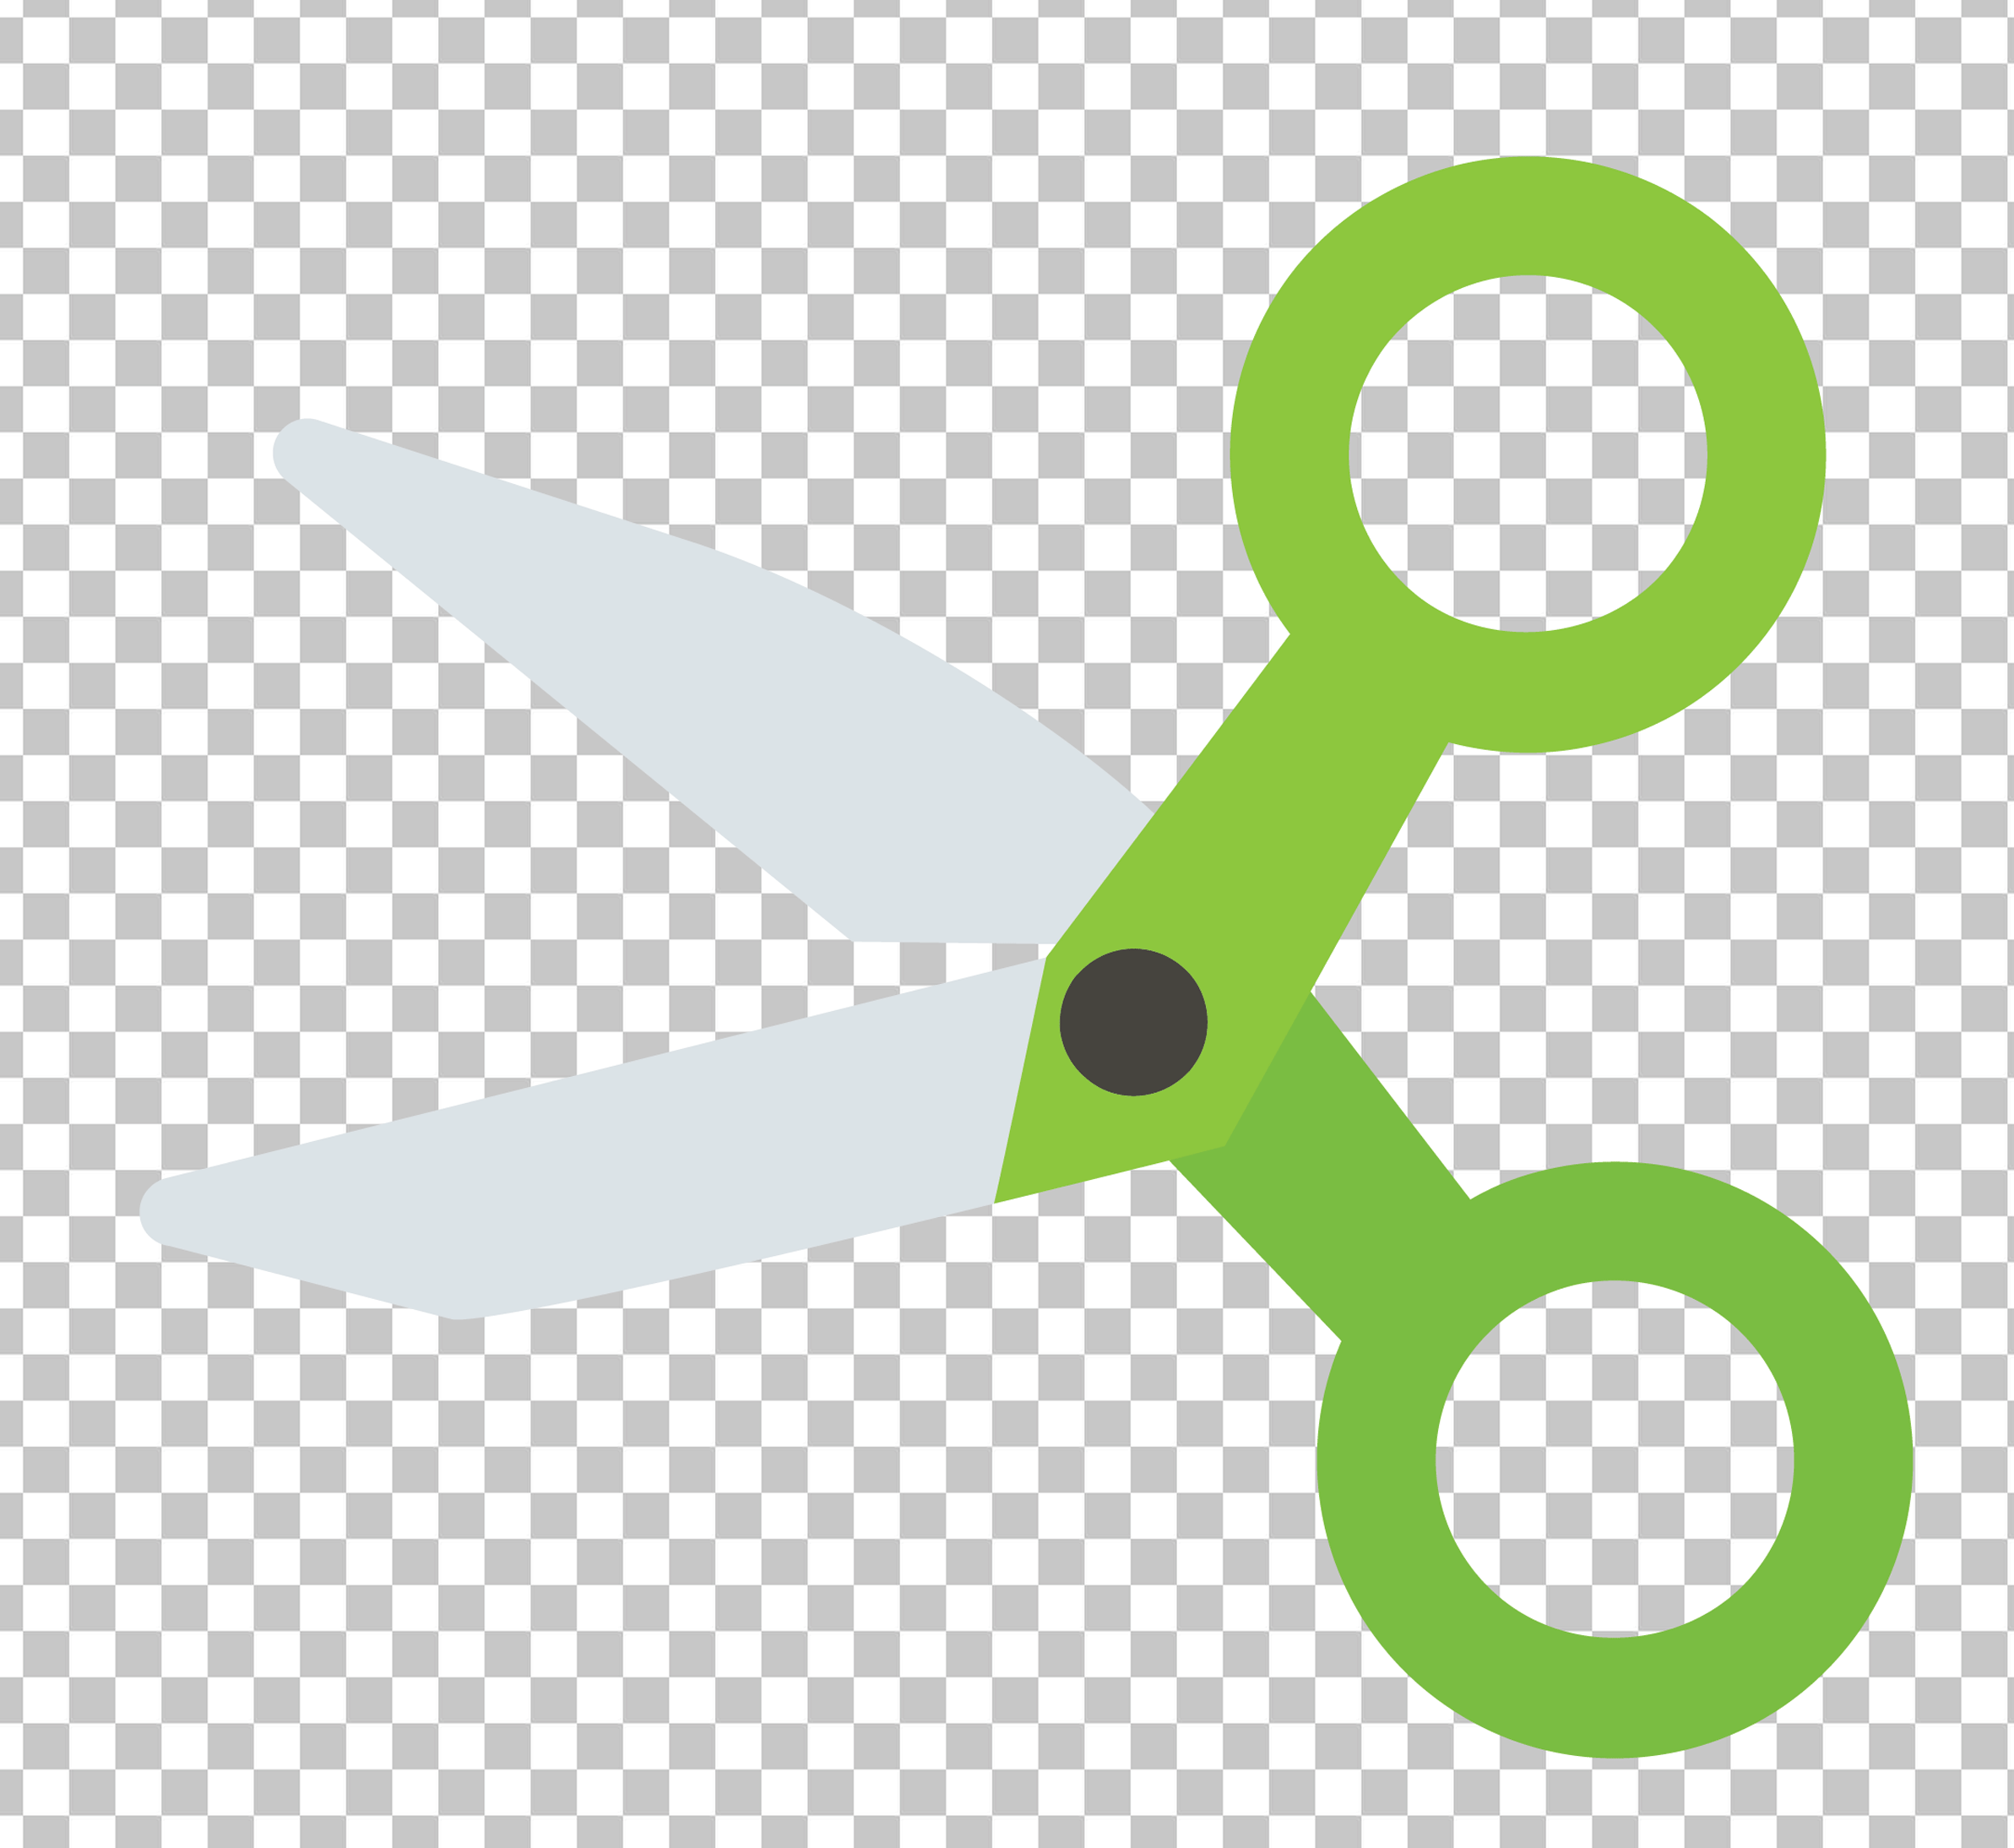 Green Scissors on Transparent Background